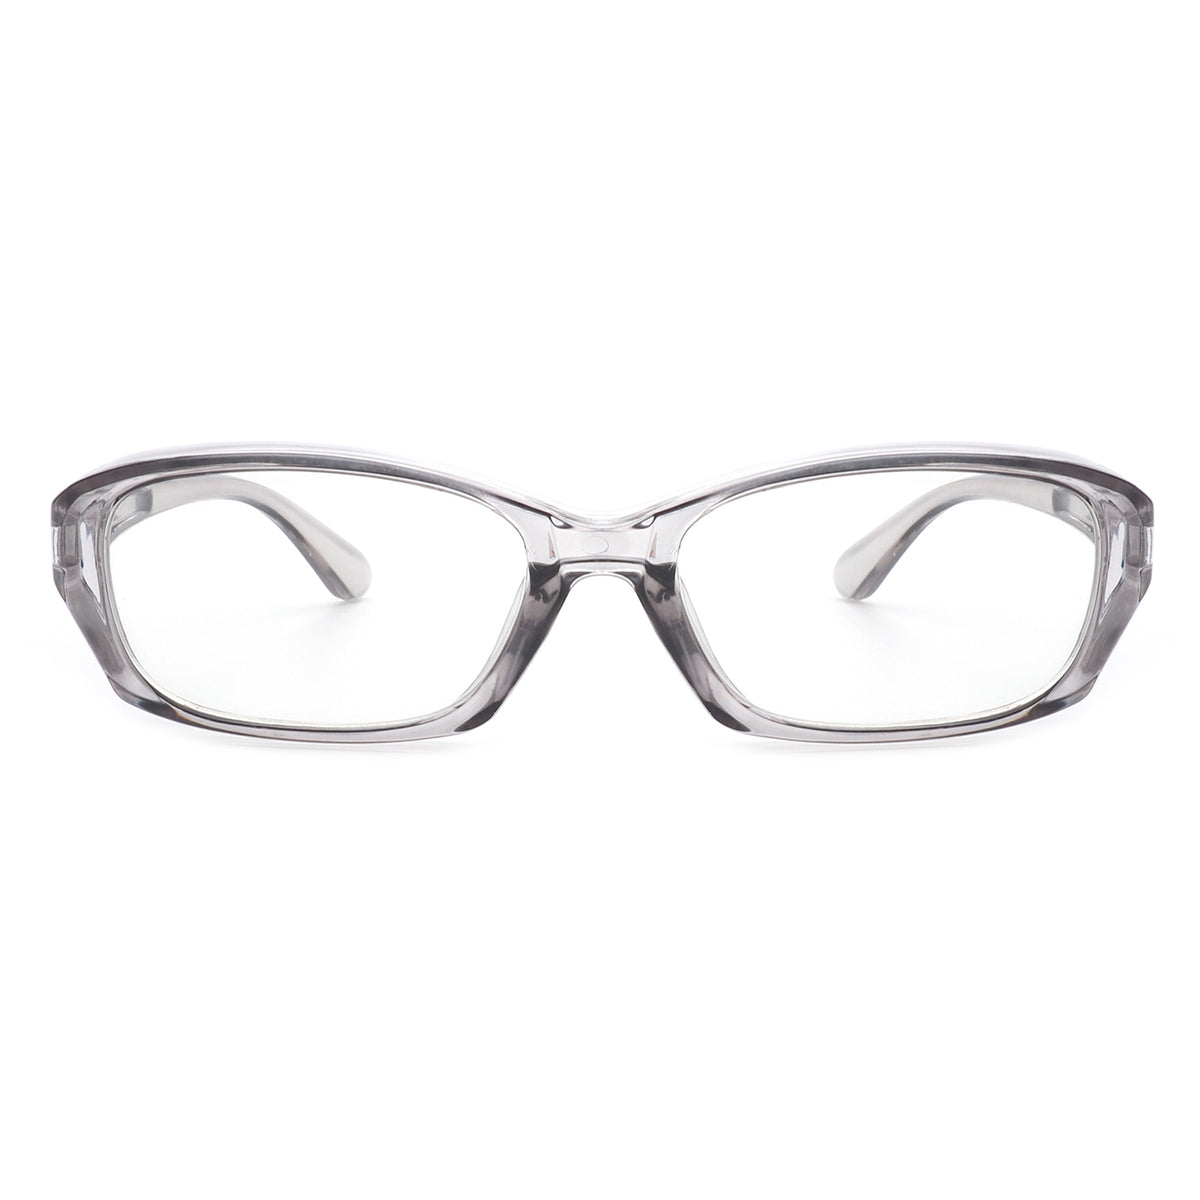 HB2019 - Rectangle Wrap Computer Anti Strain Blue Light Blocking Glasses